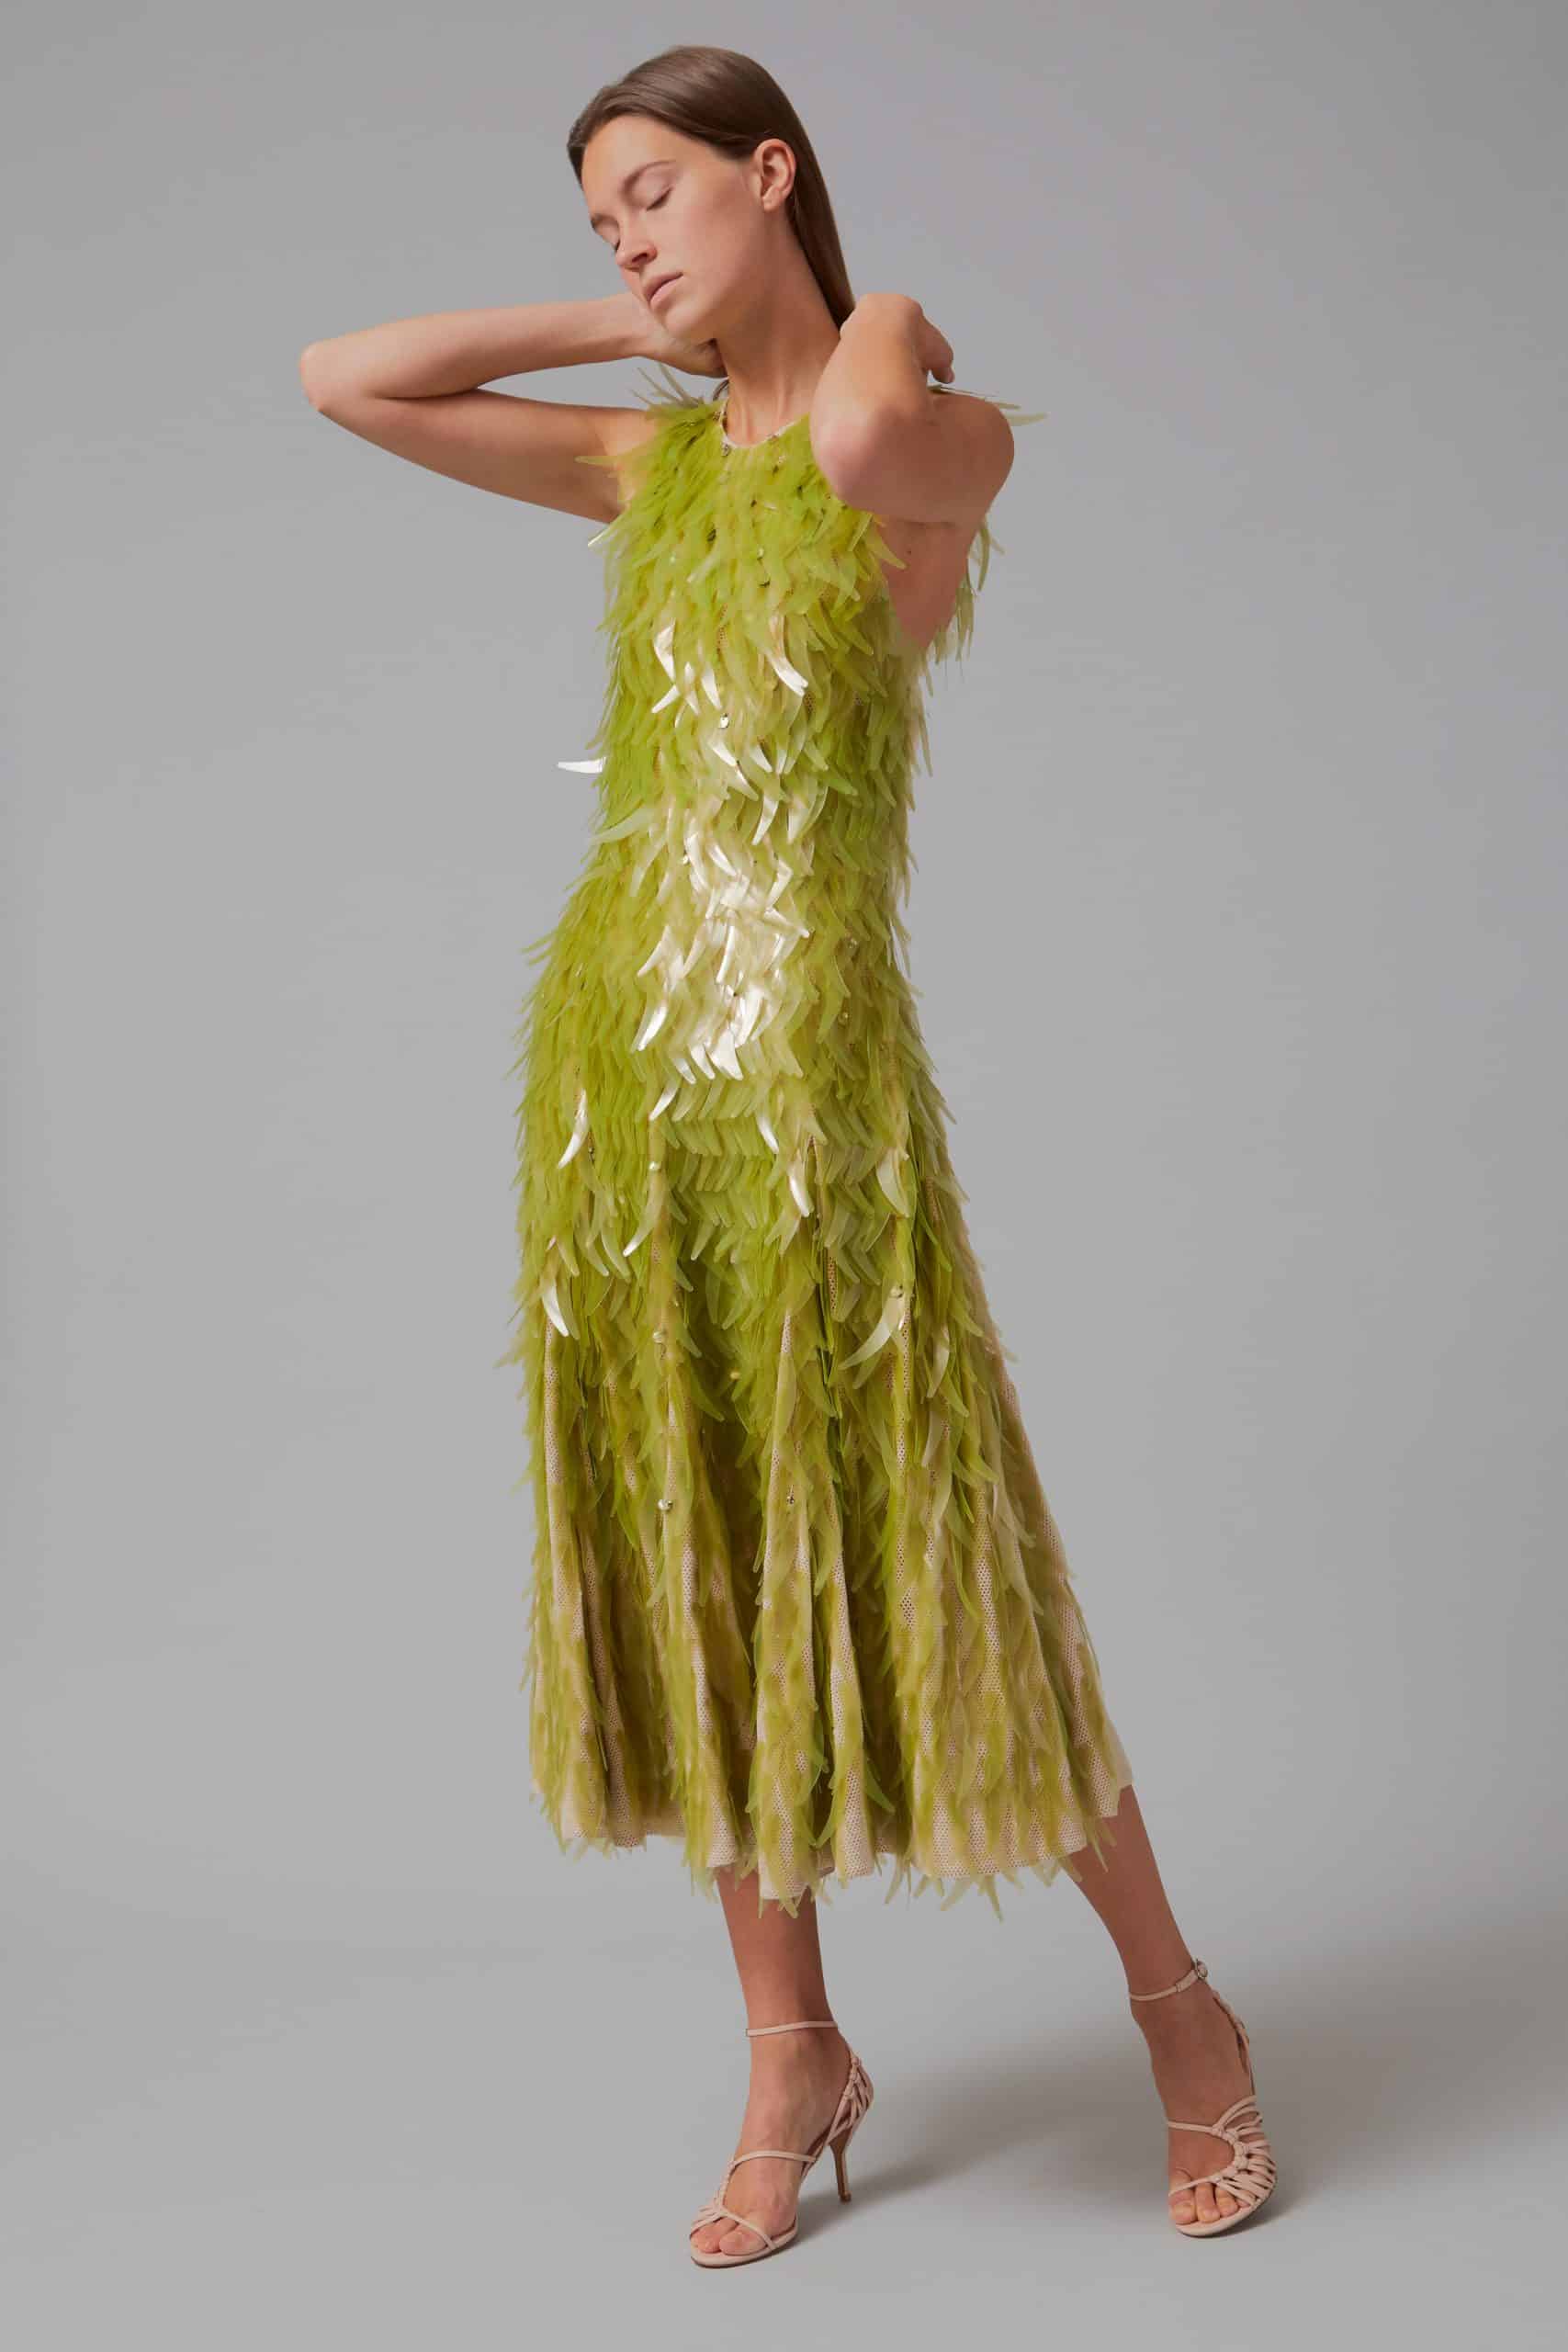 Phillip Lim en Charlotte McCurdy maken jurk van algen